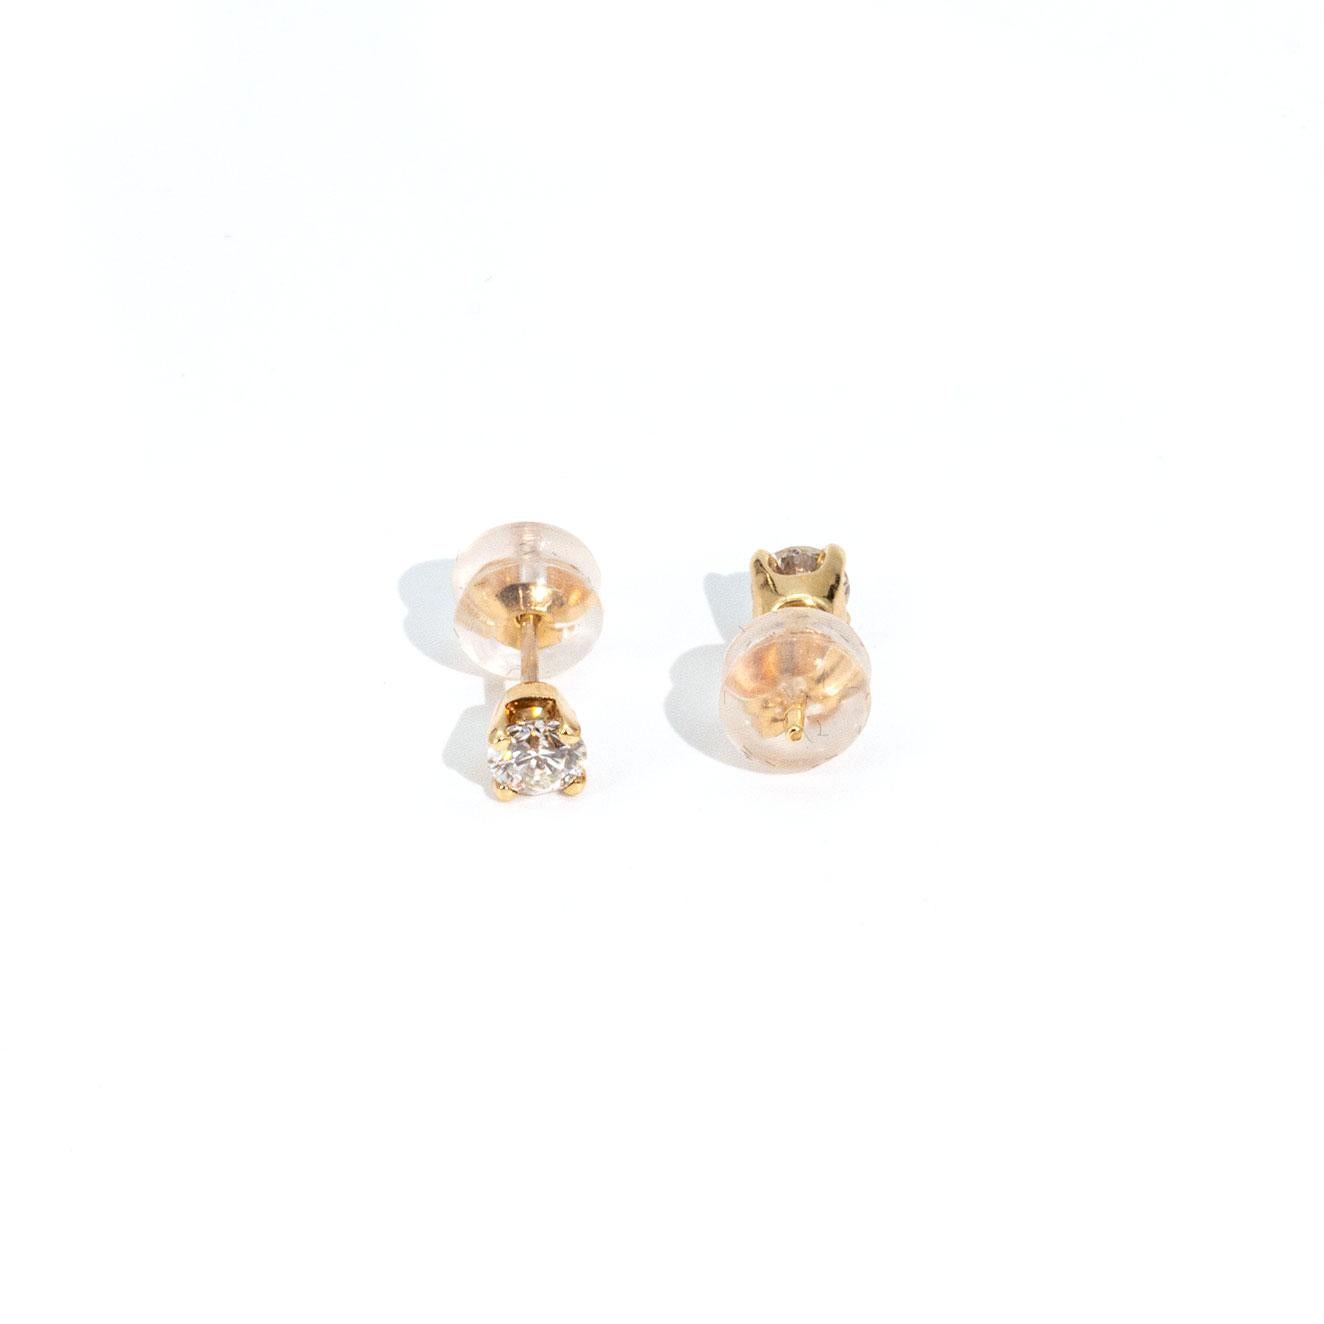 9 carat white gold brilliant cut stud earrings